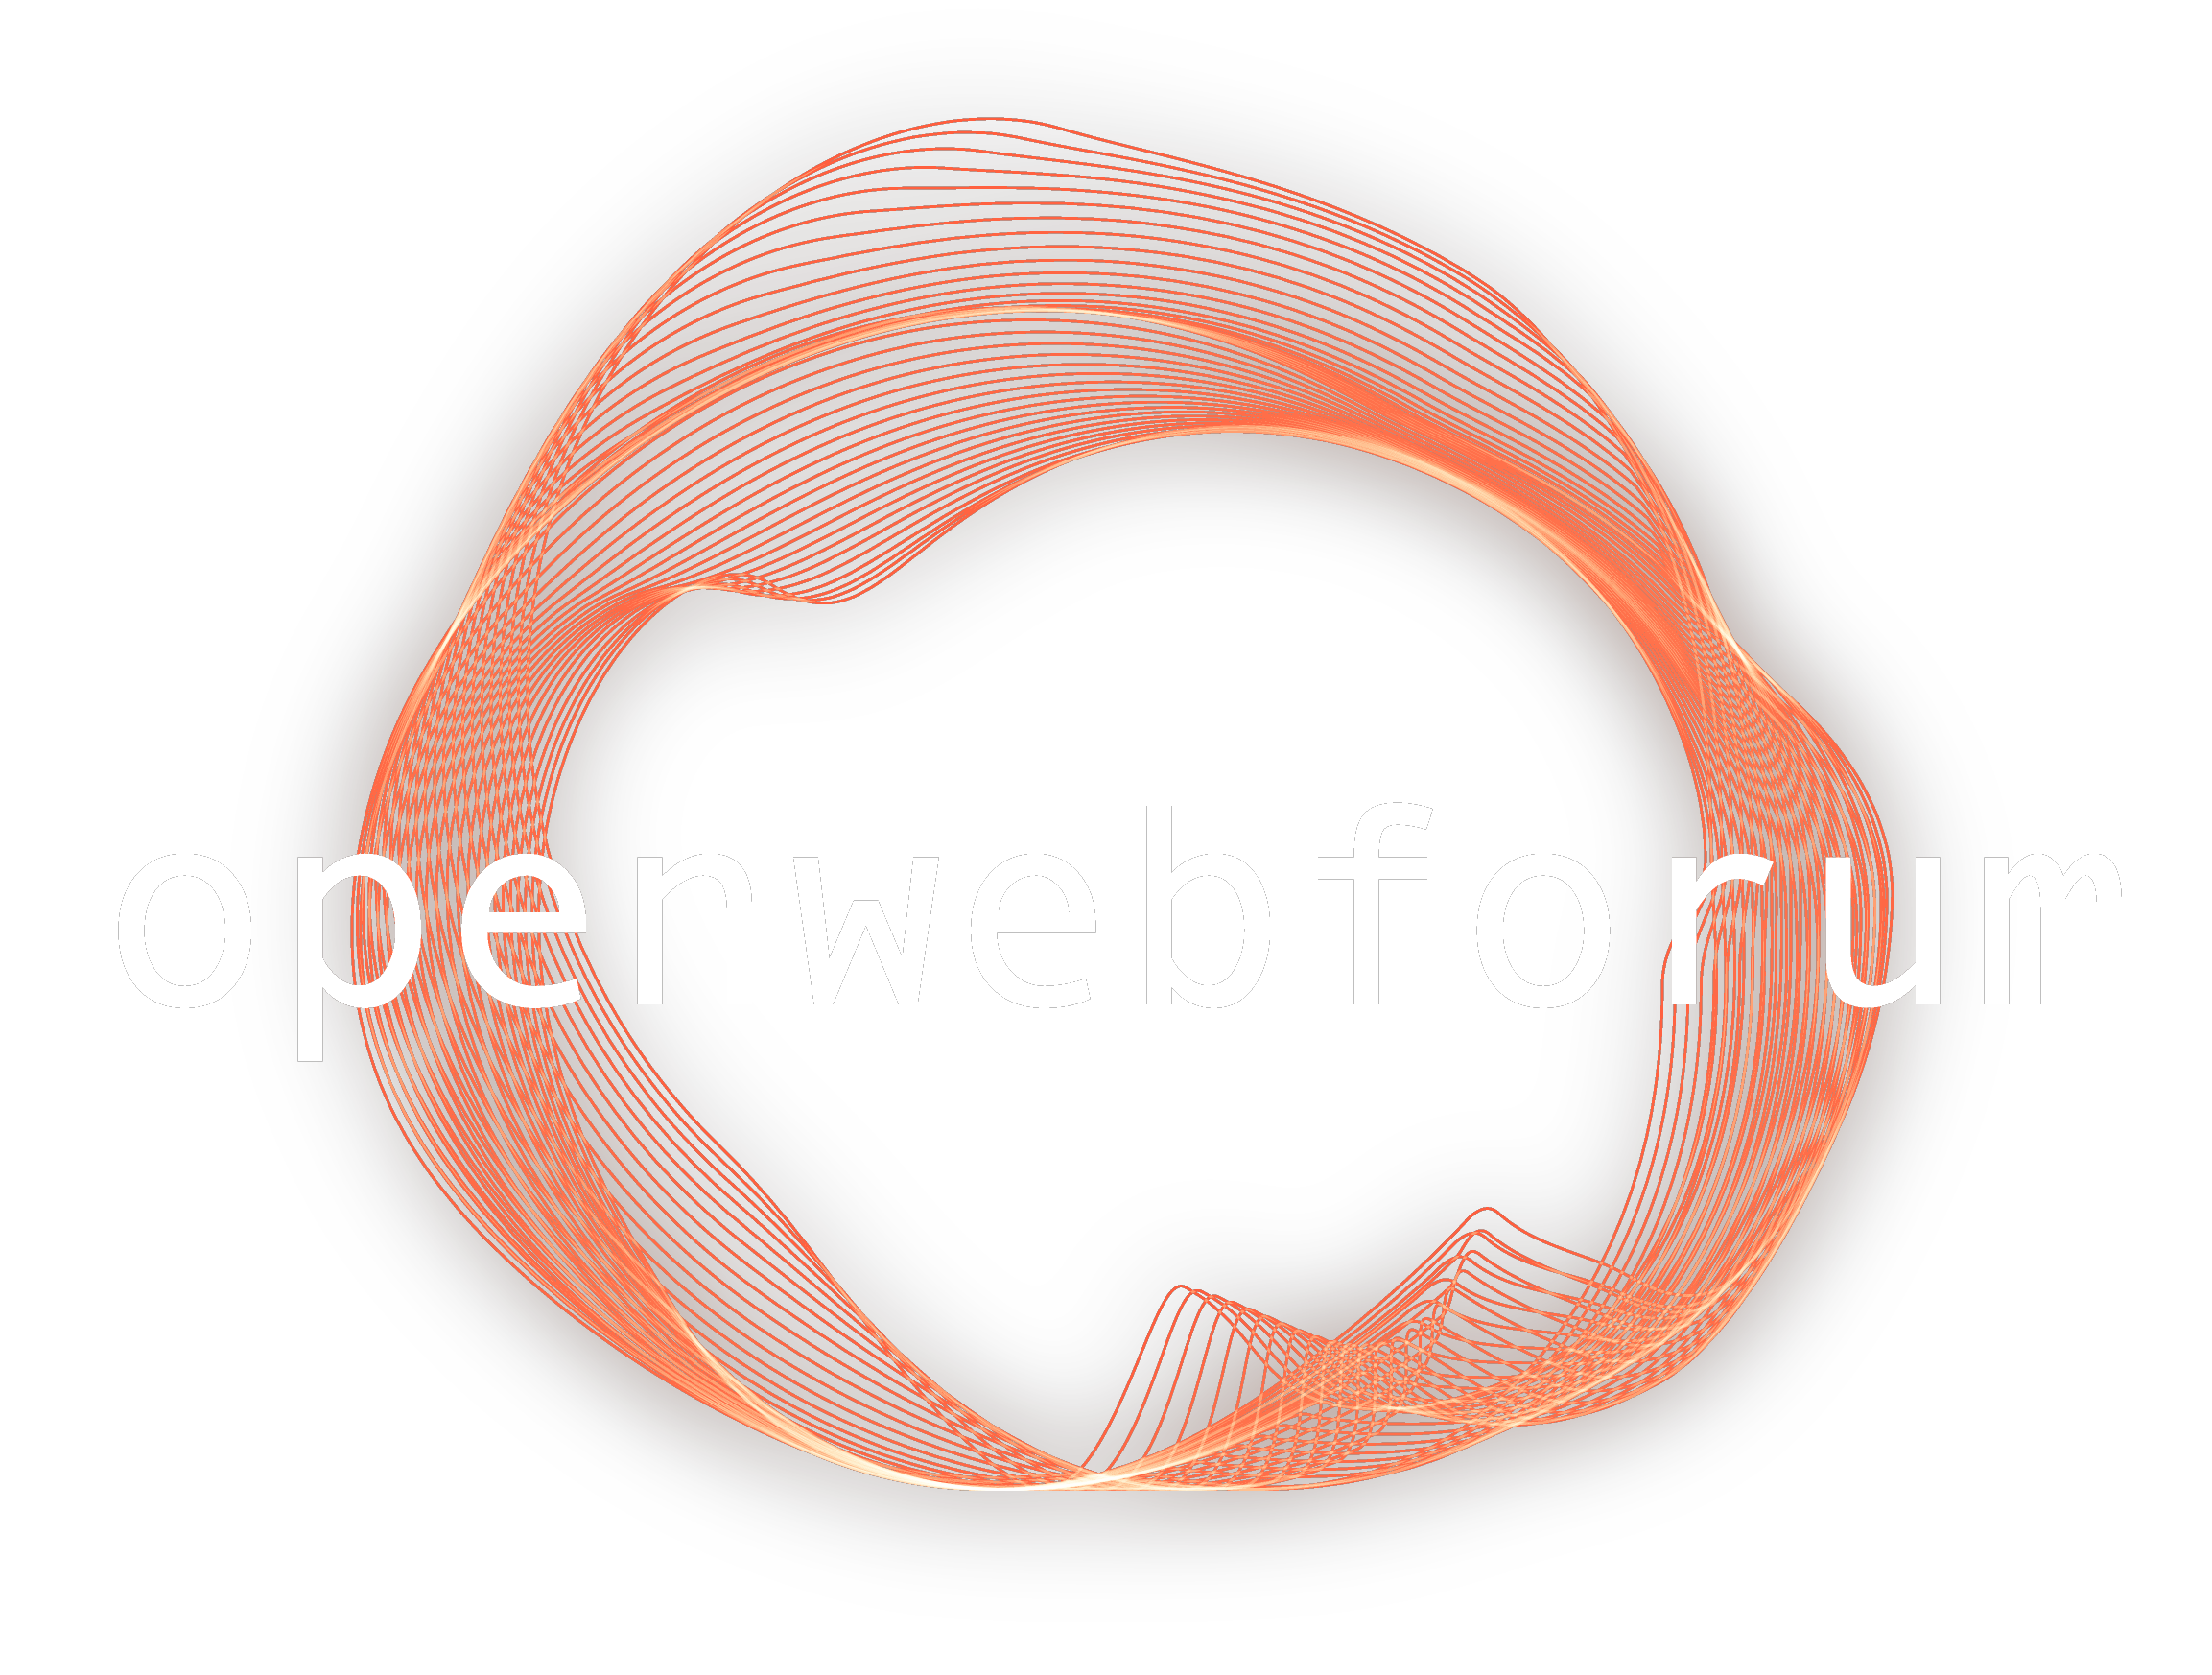 Open Web Forum logo